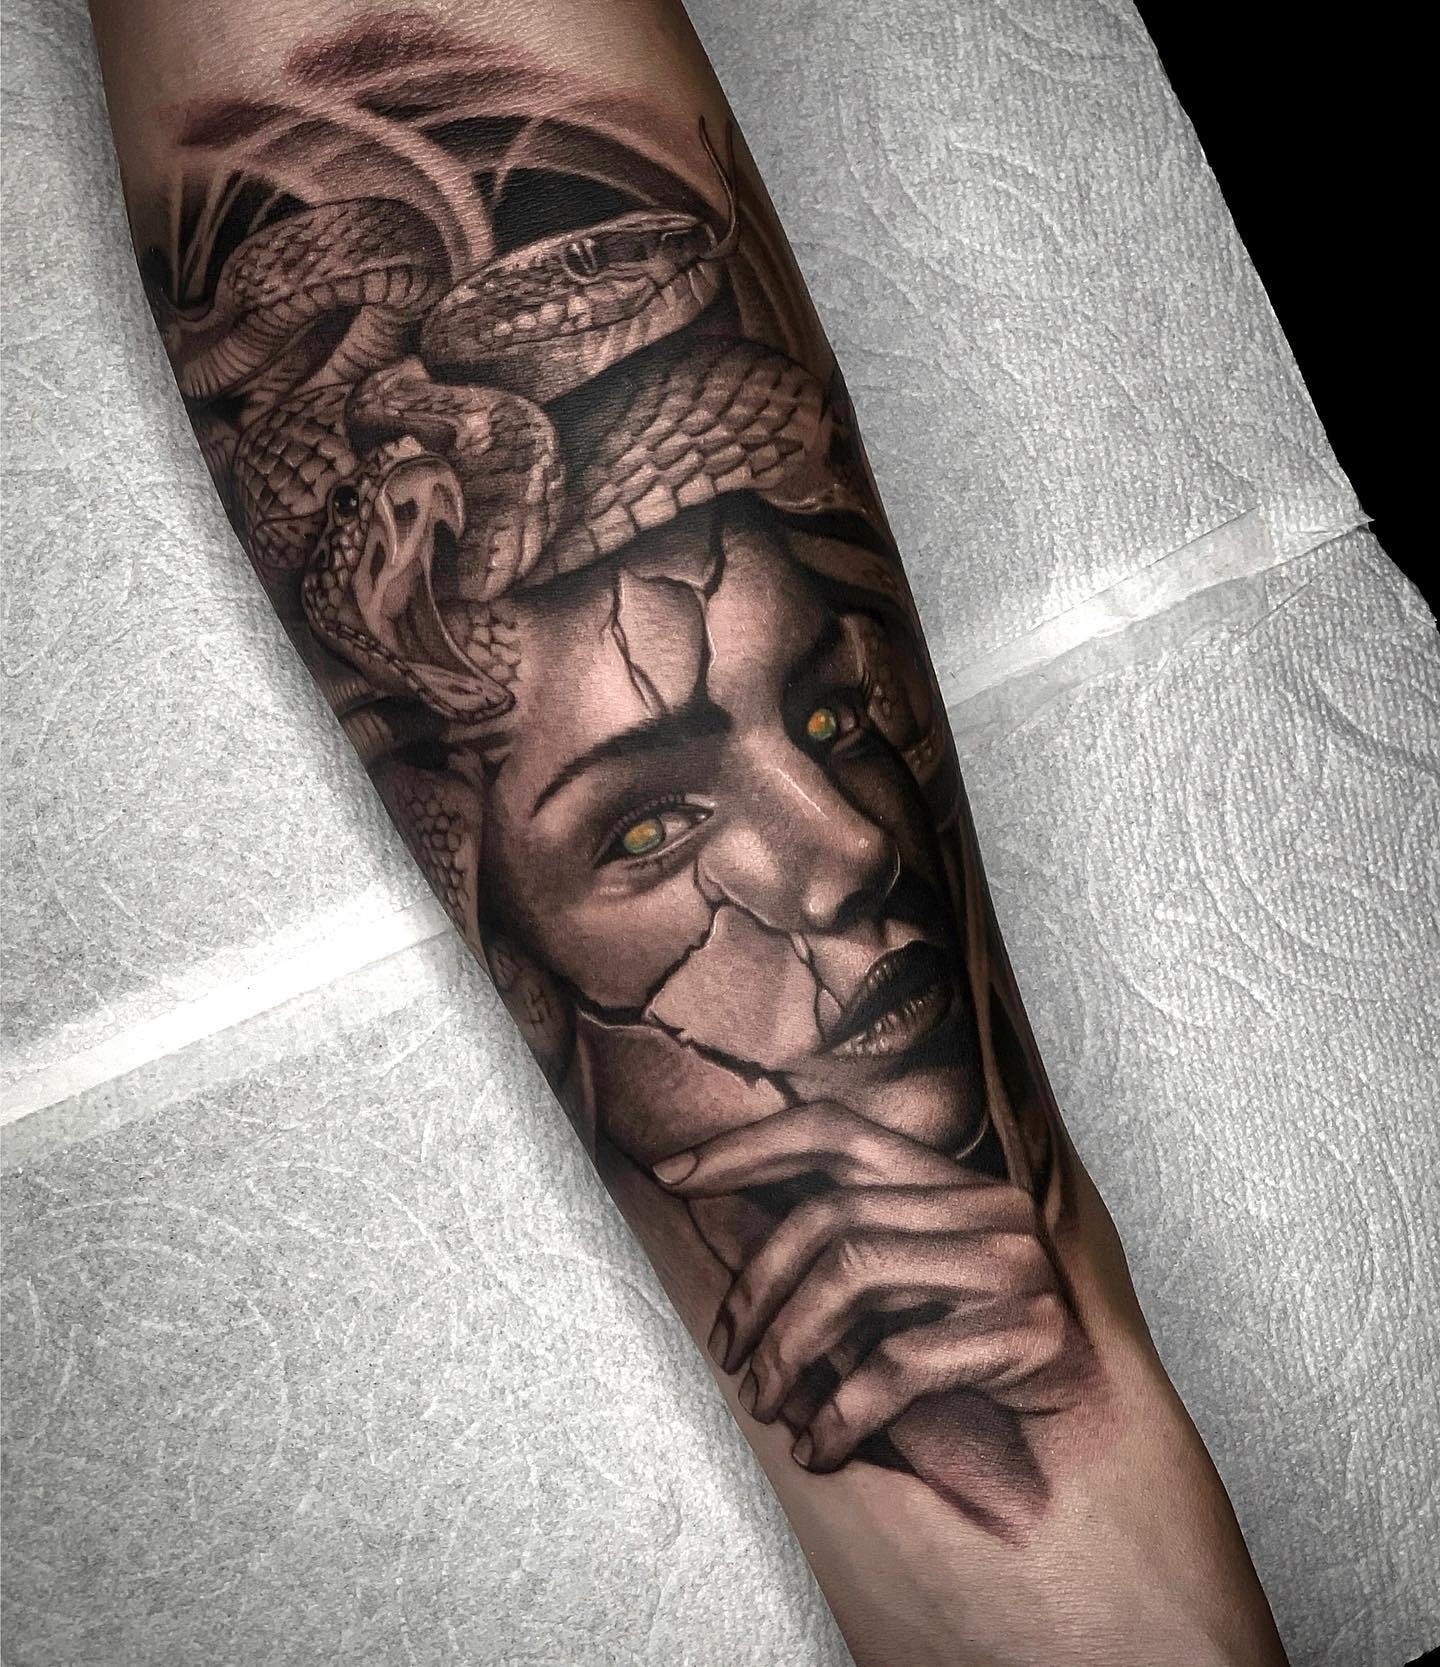 Tatuaje de Medusa de aspecto vengativo.